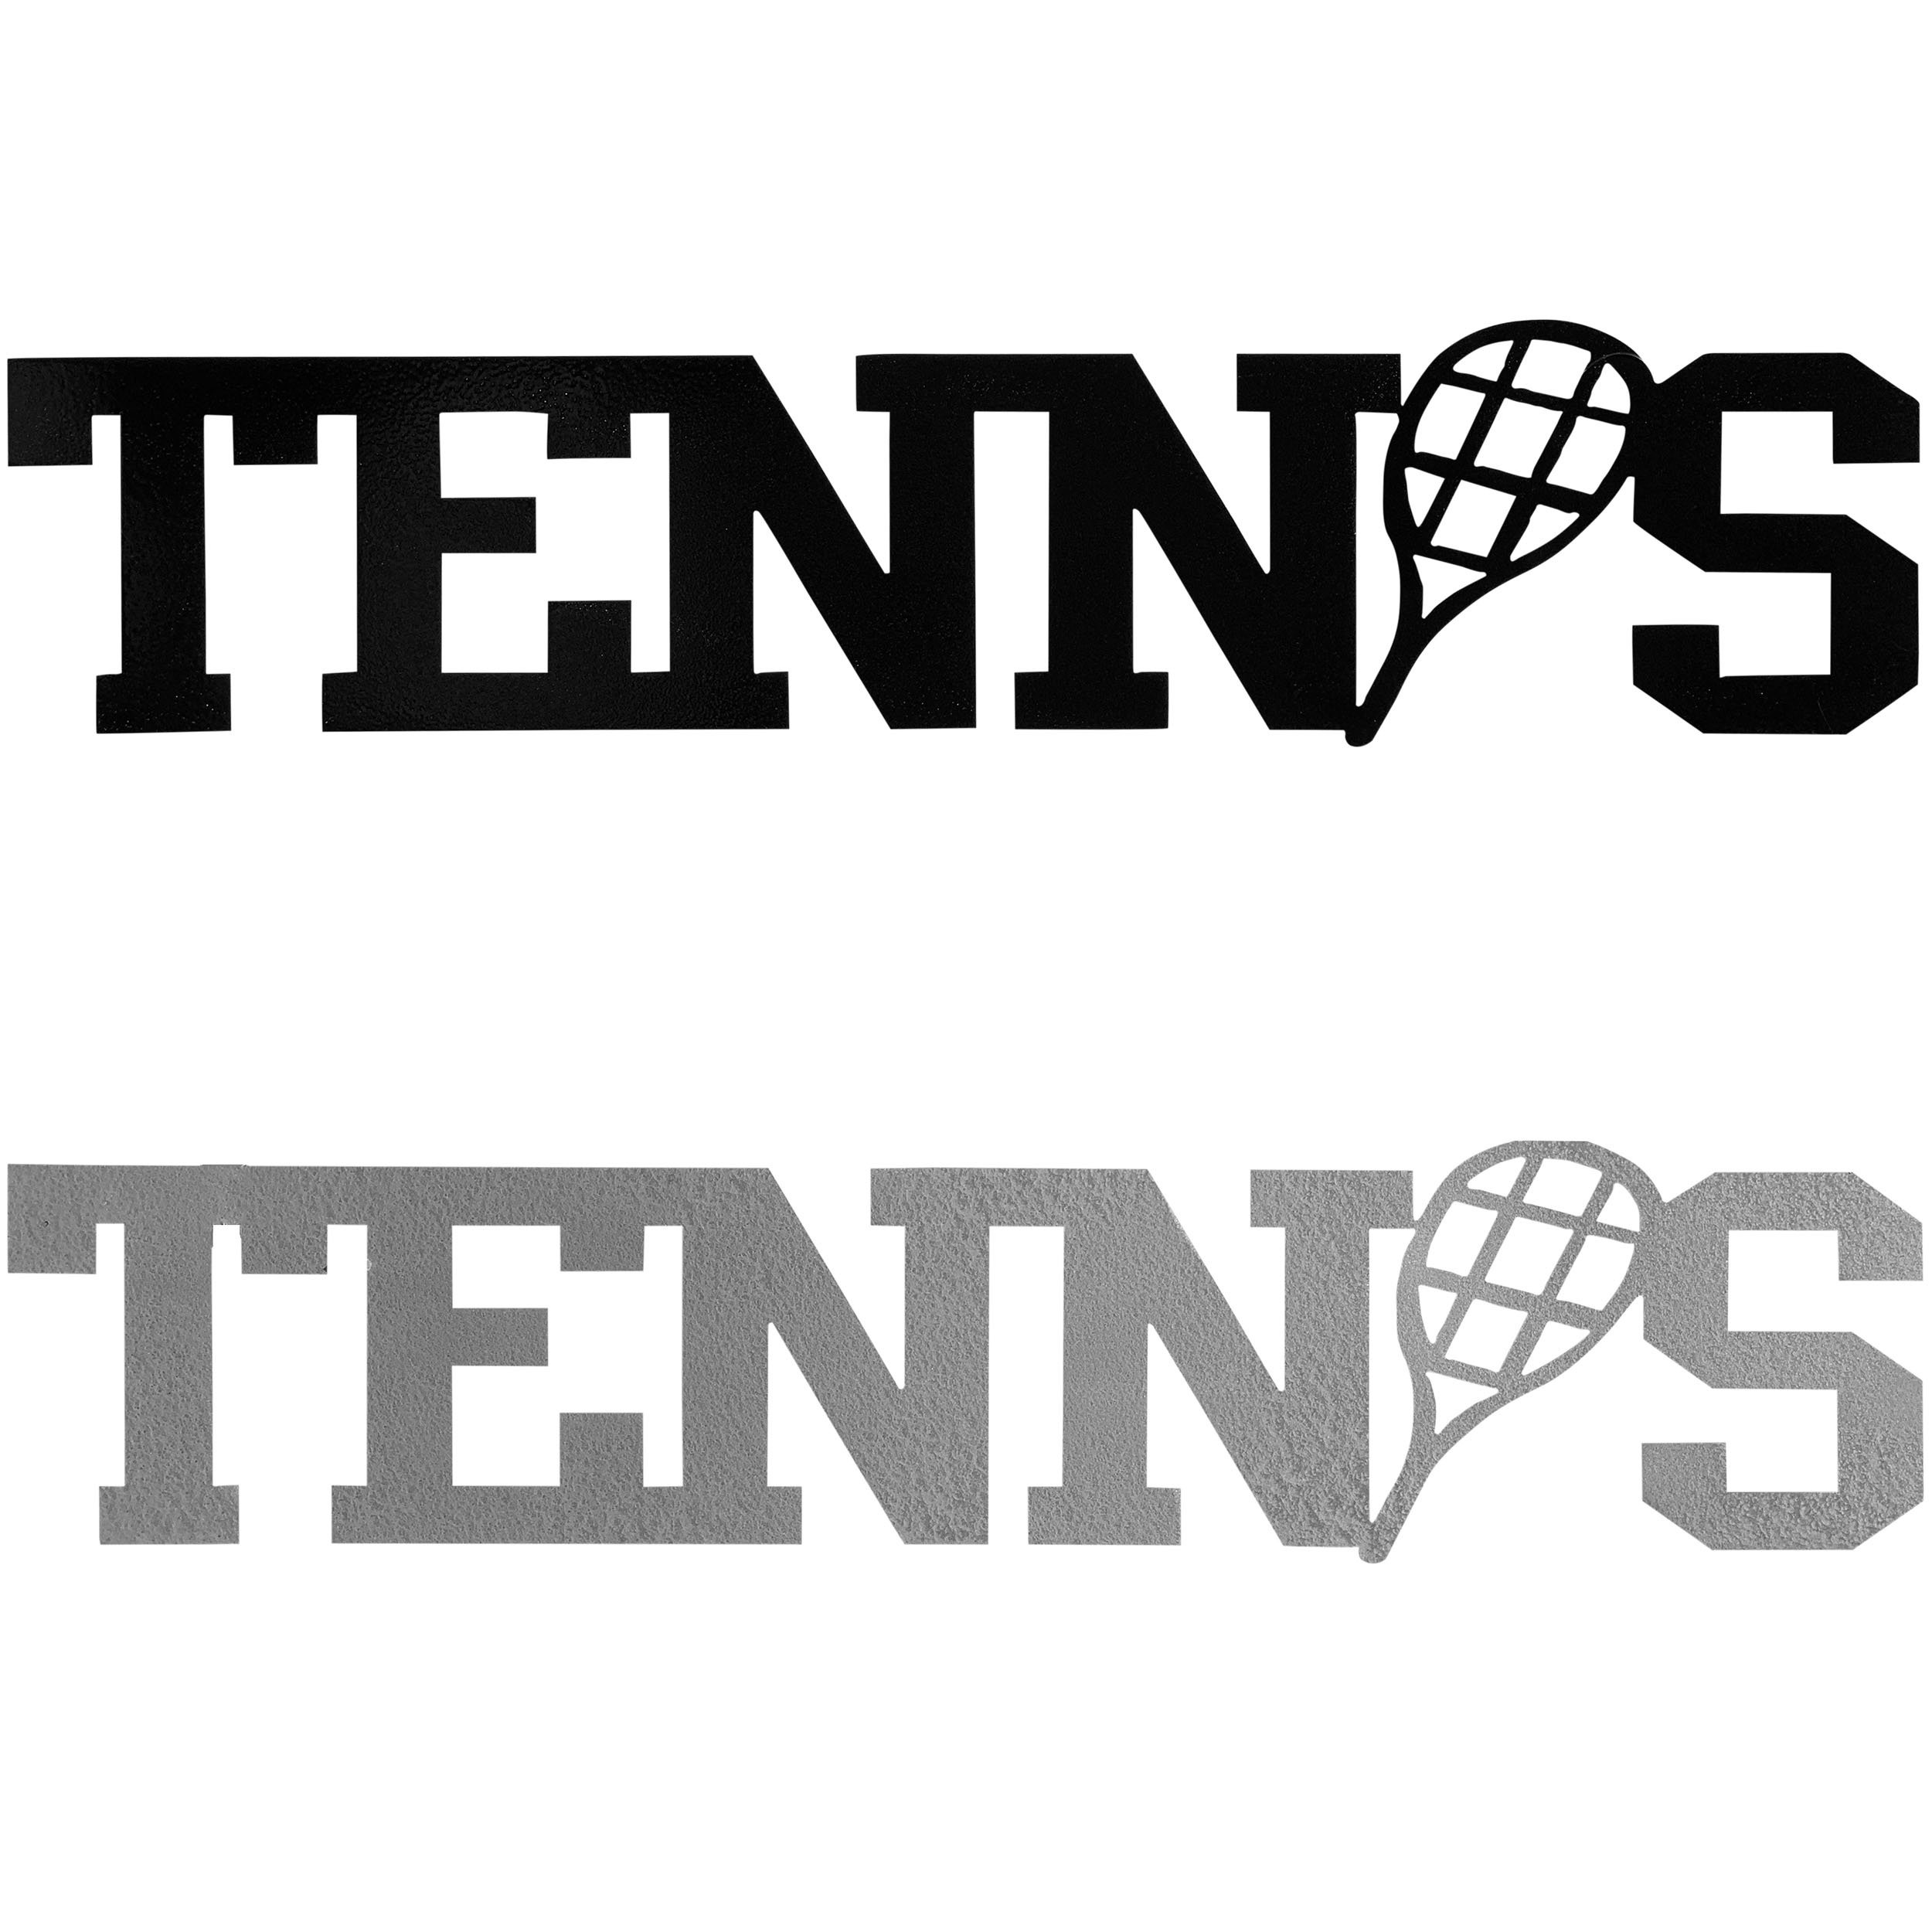 Tennis Word by Dugout Creek Designs